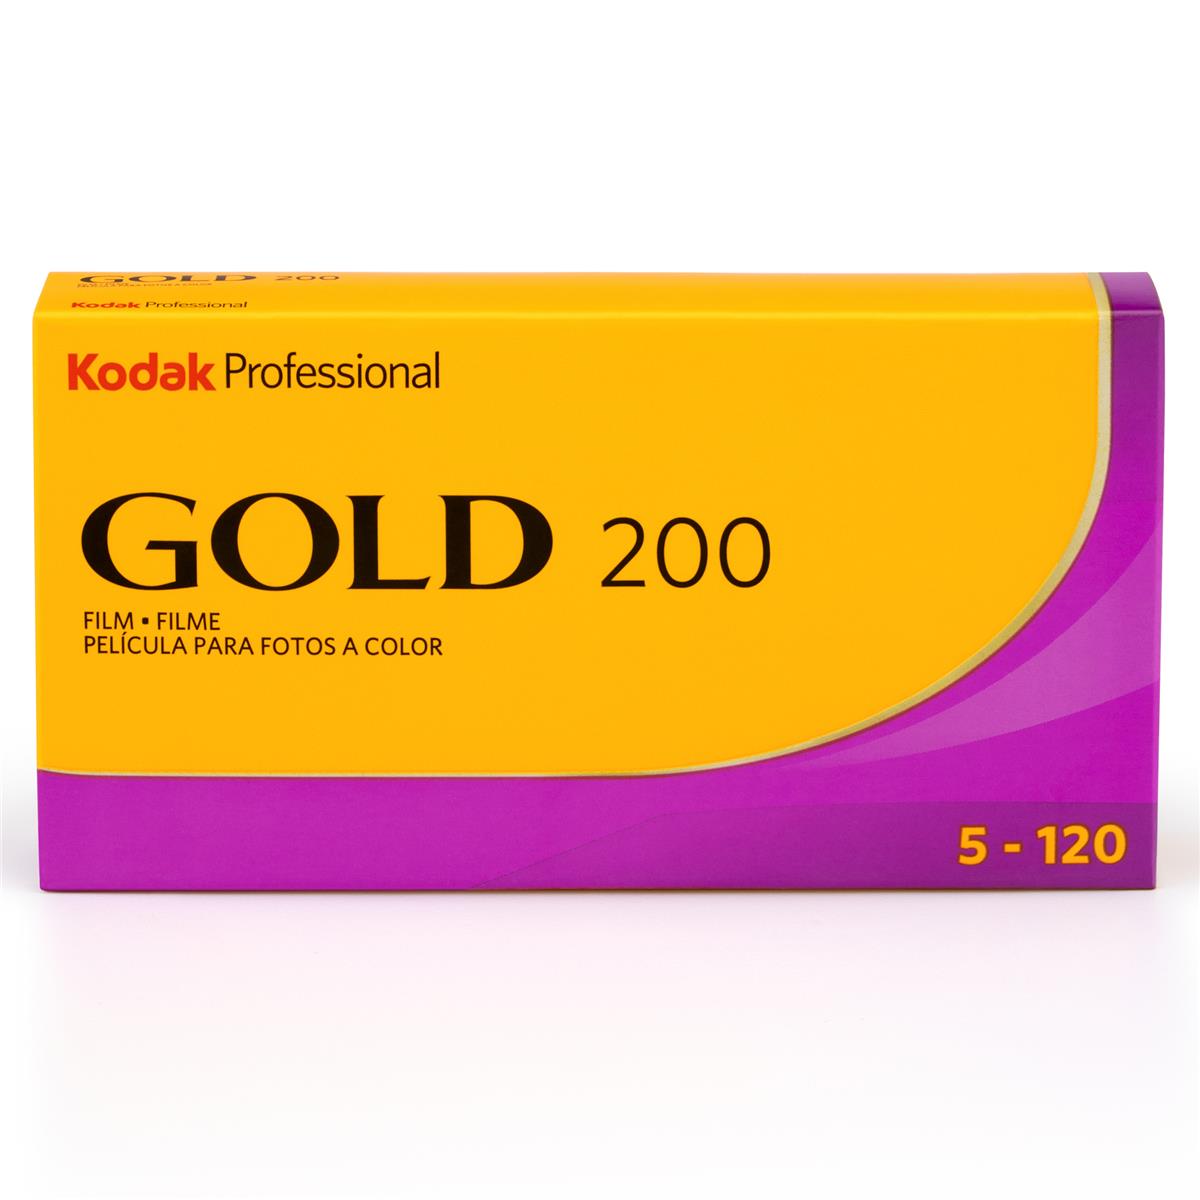 KODAK Gold 200 Color Negative Film, 120 рулонов пленки, 5 шт. в упаковке #1075597